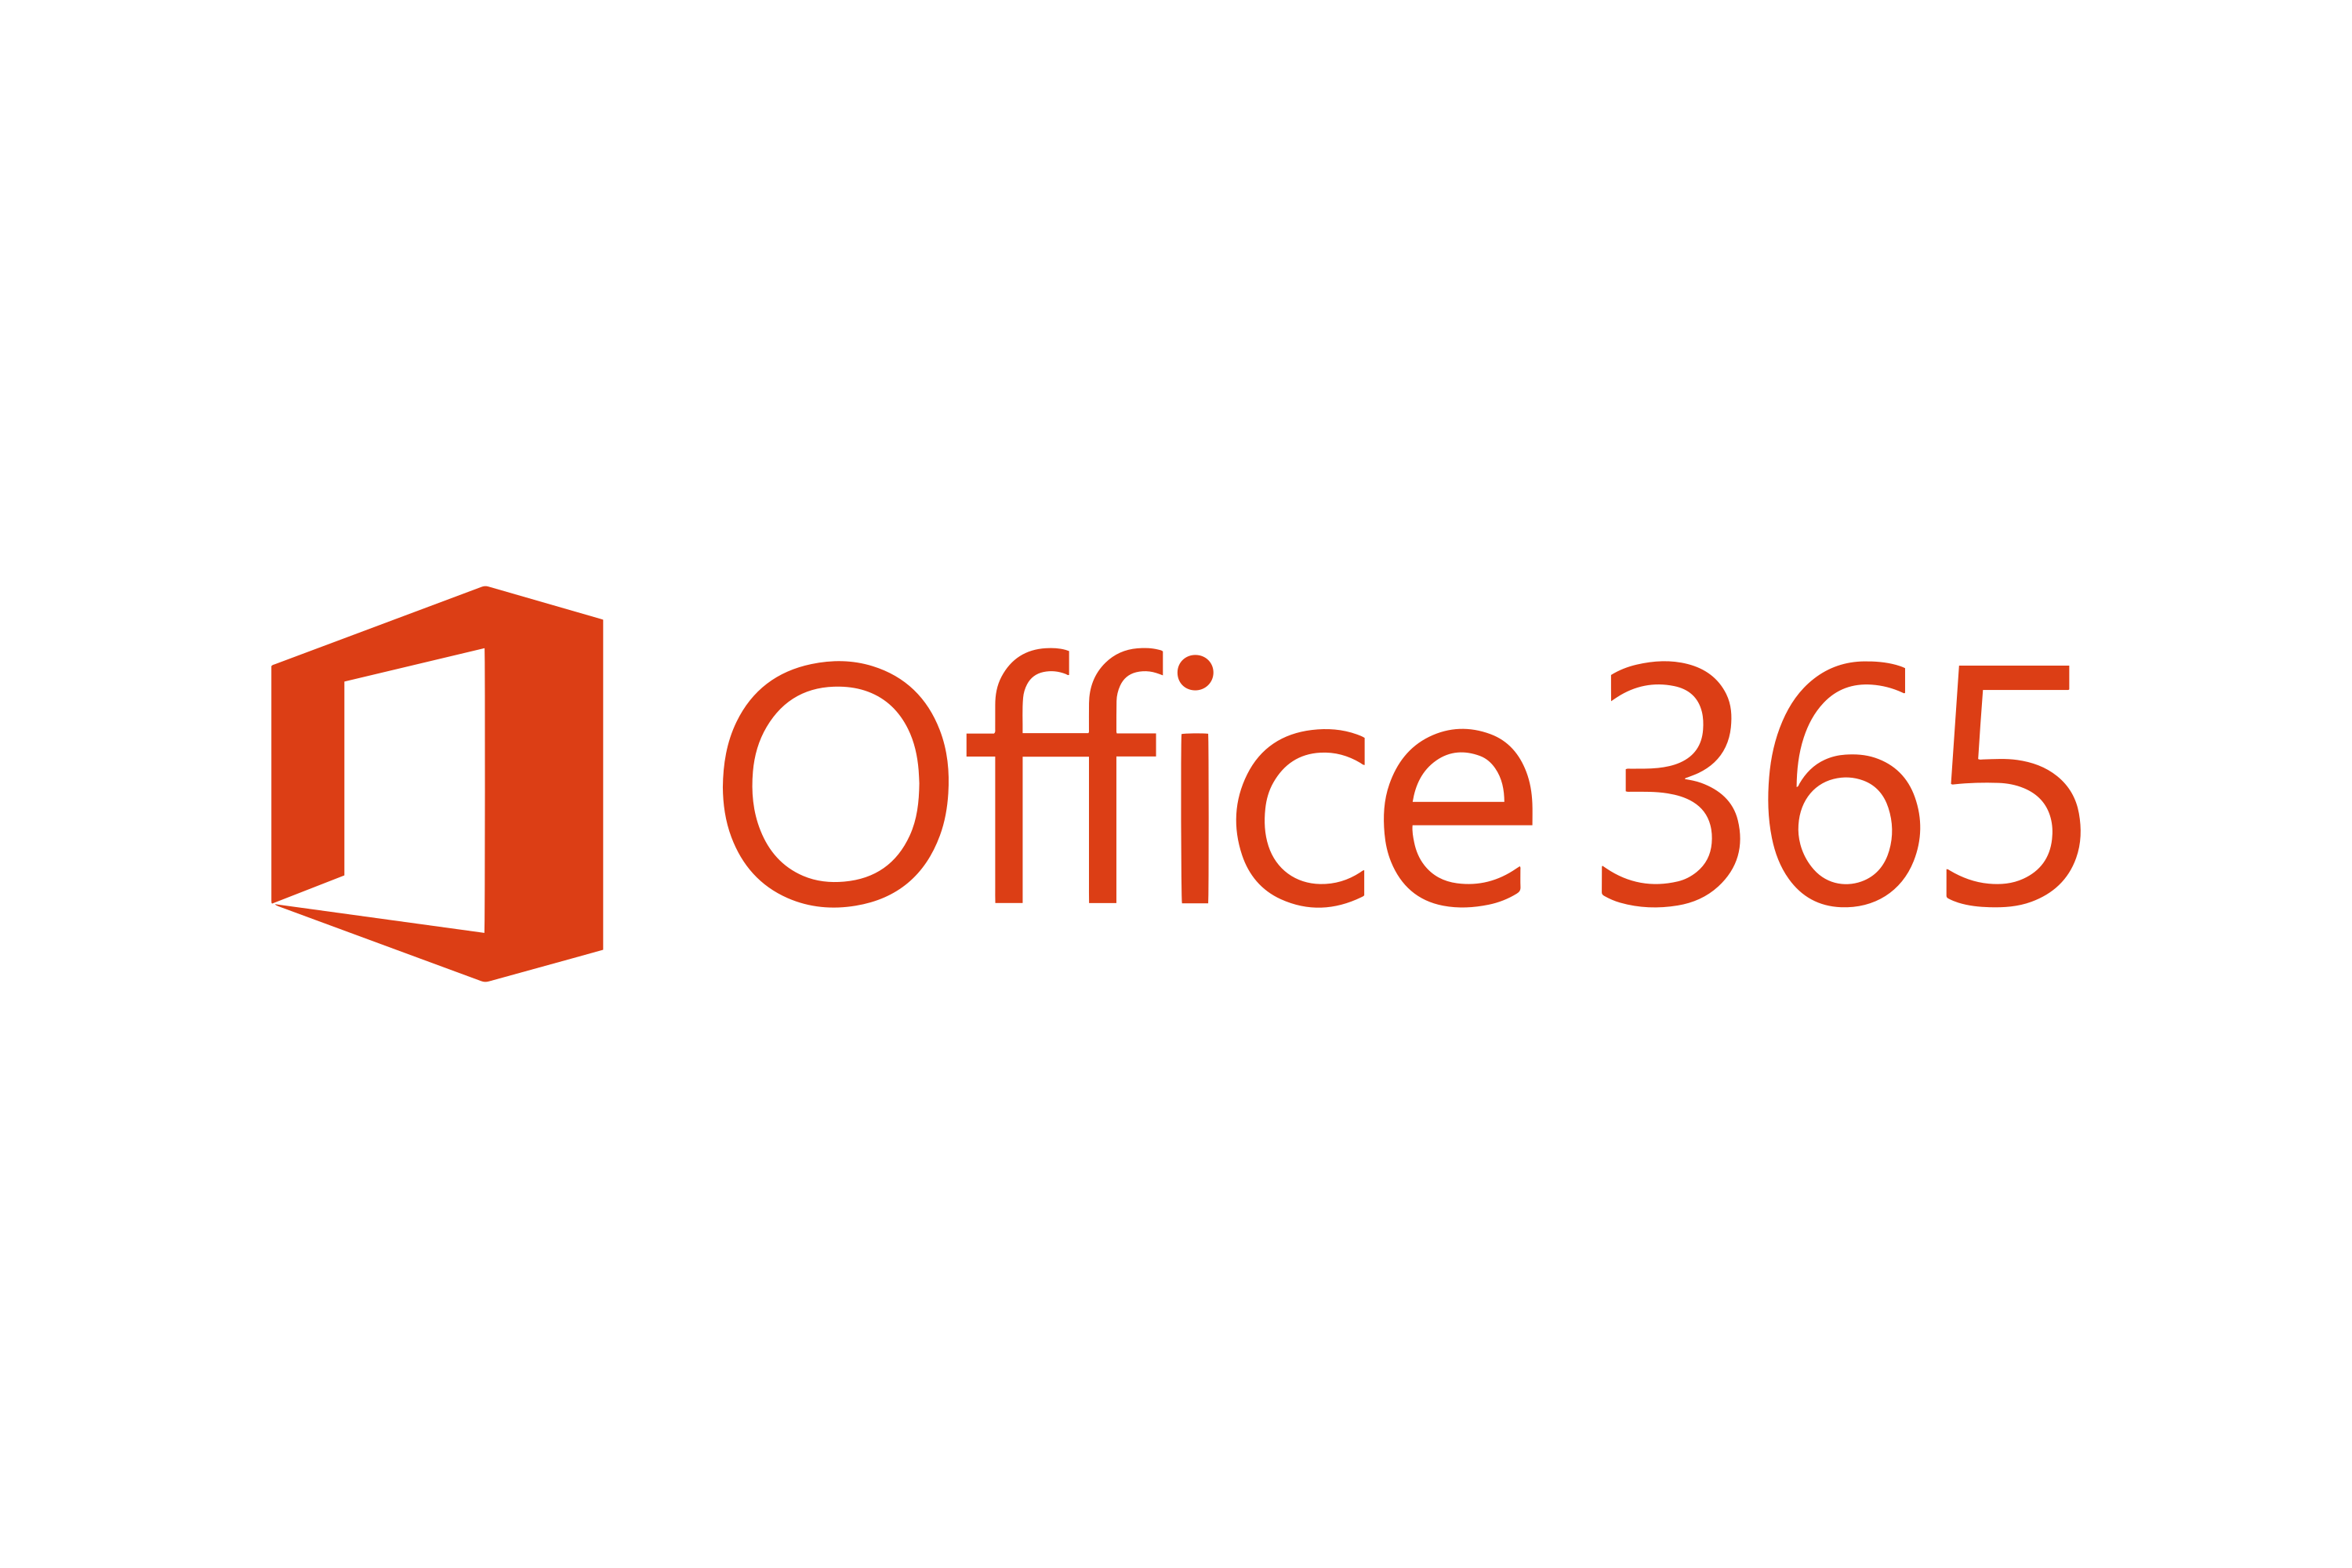 Download Office 365 Logo In Svg Vector Or Png File Format - Logo.Wine